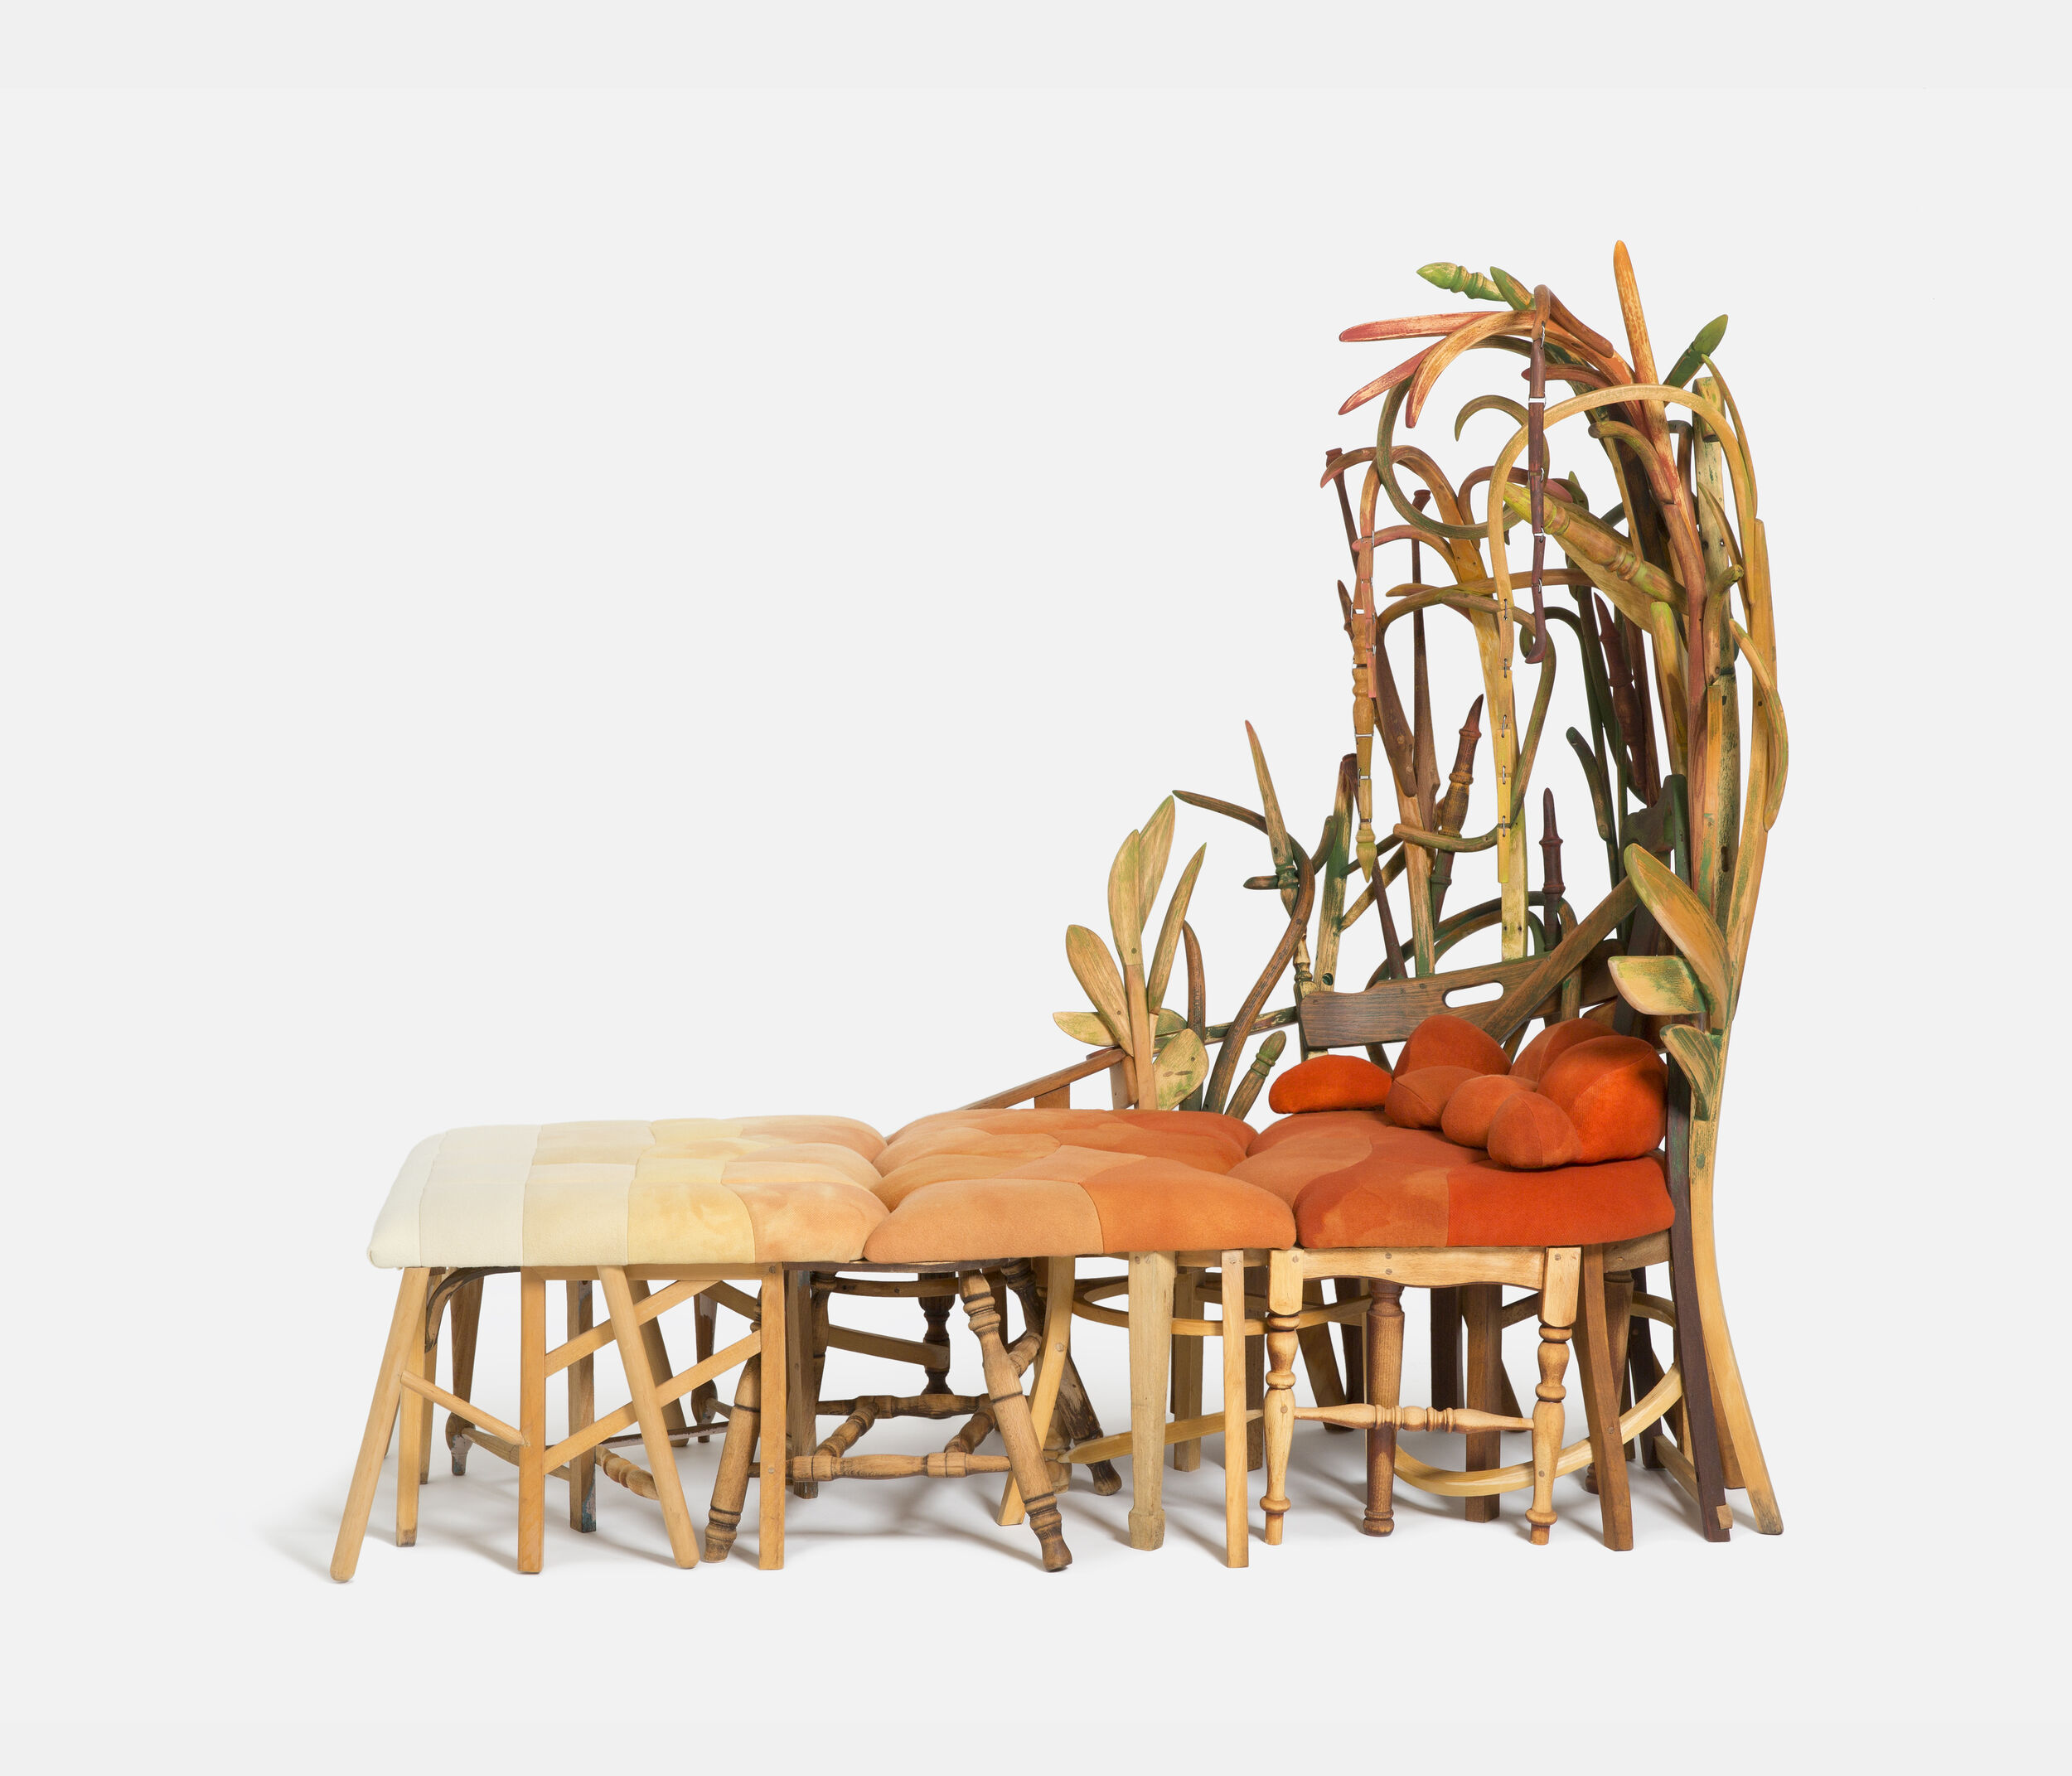 Australian Furniture Design Award 2022